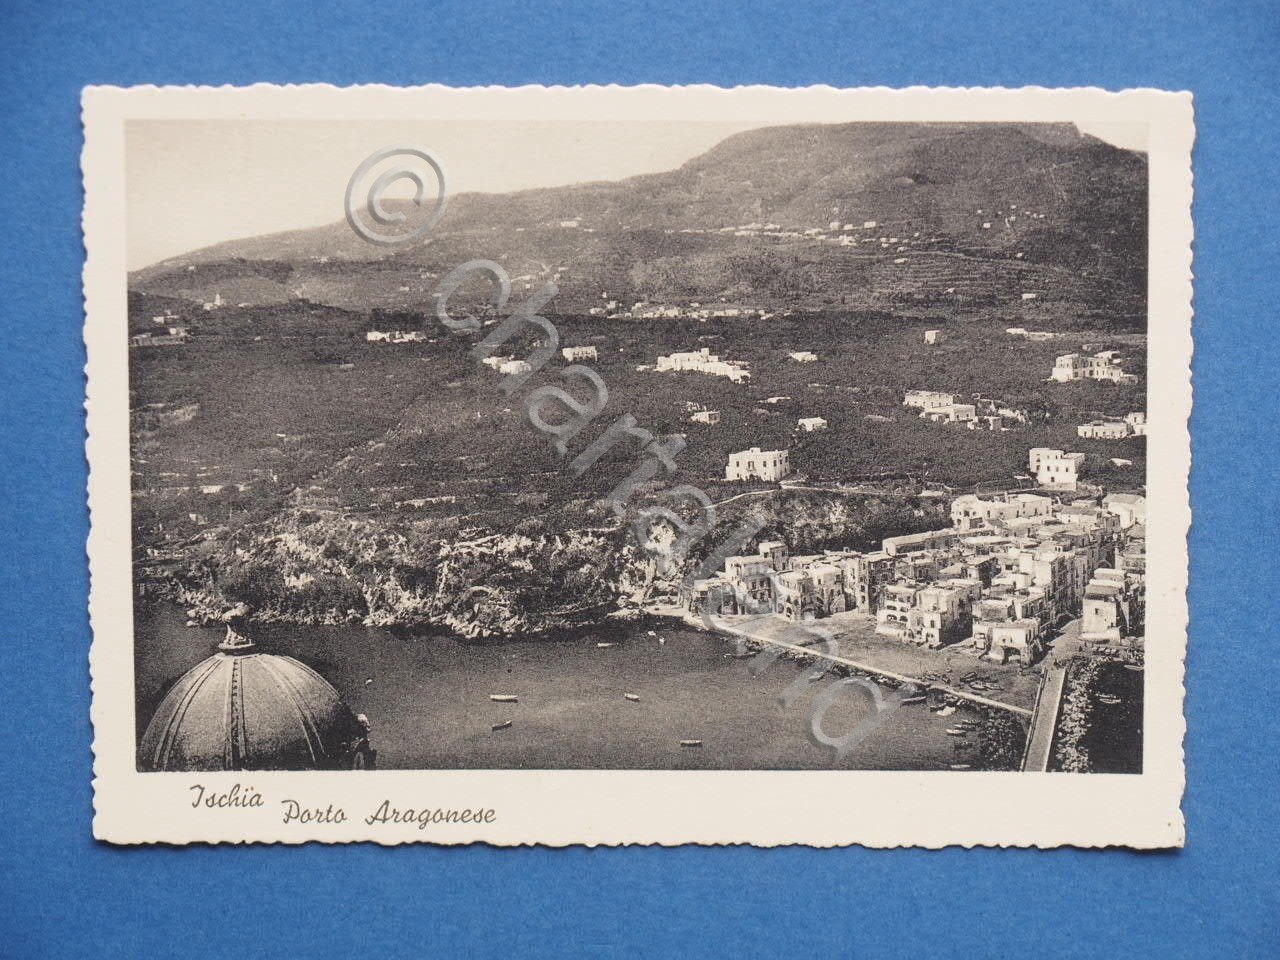 Cartolina Ischia - Porto Aragonese - 1940 ca..